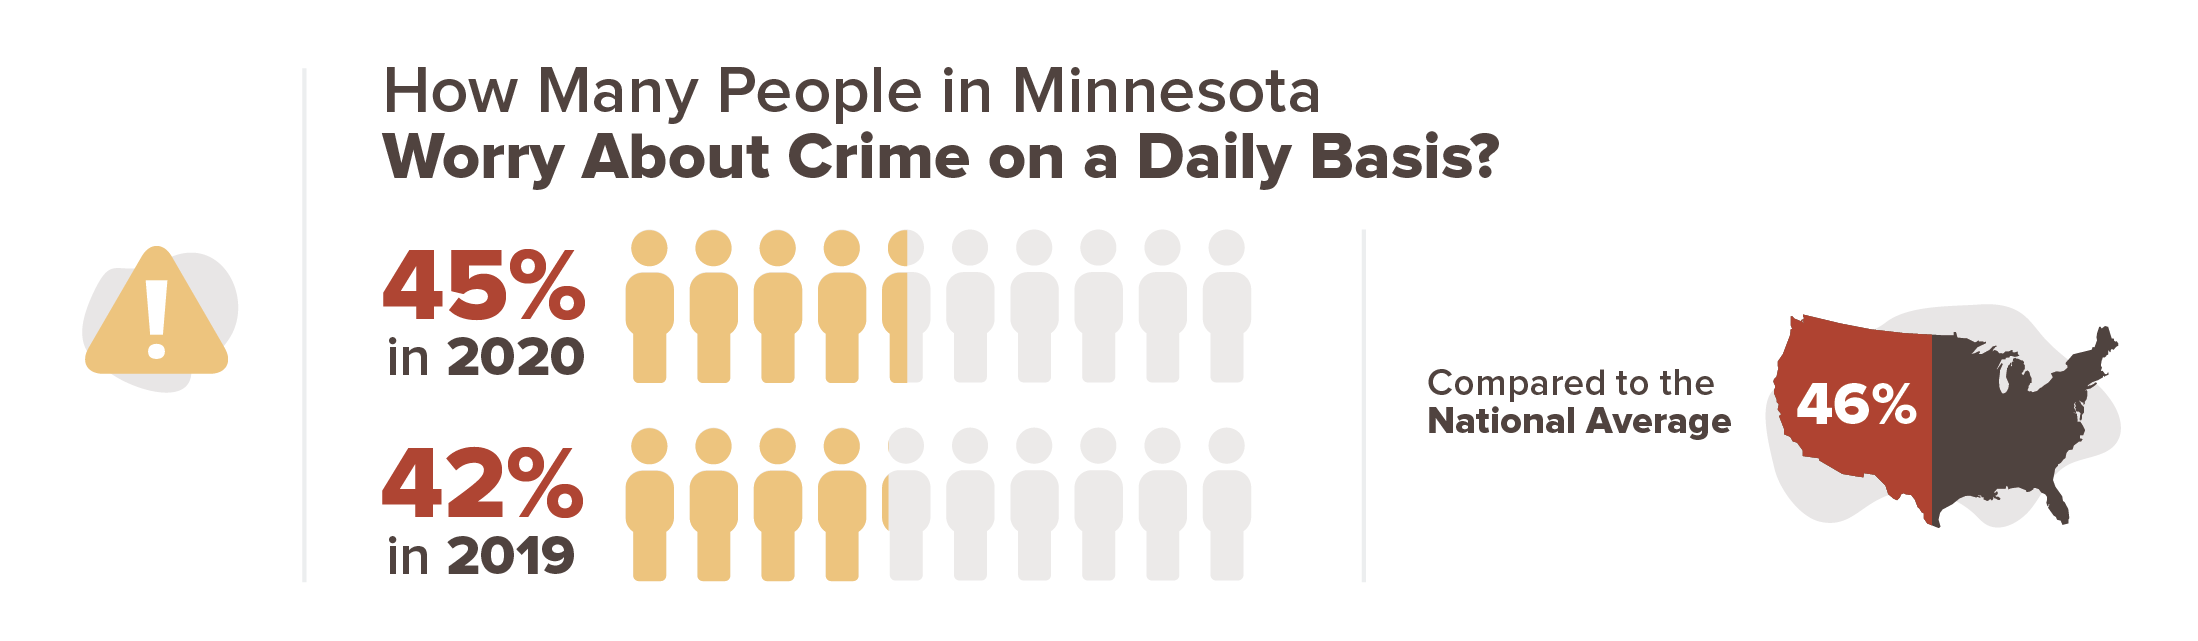 Minnesota crime concern infographic